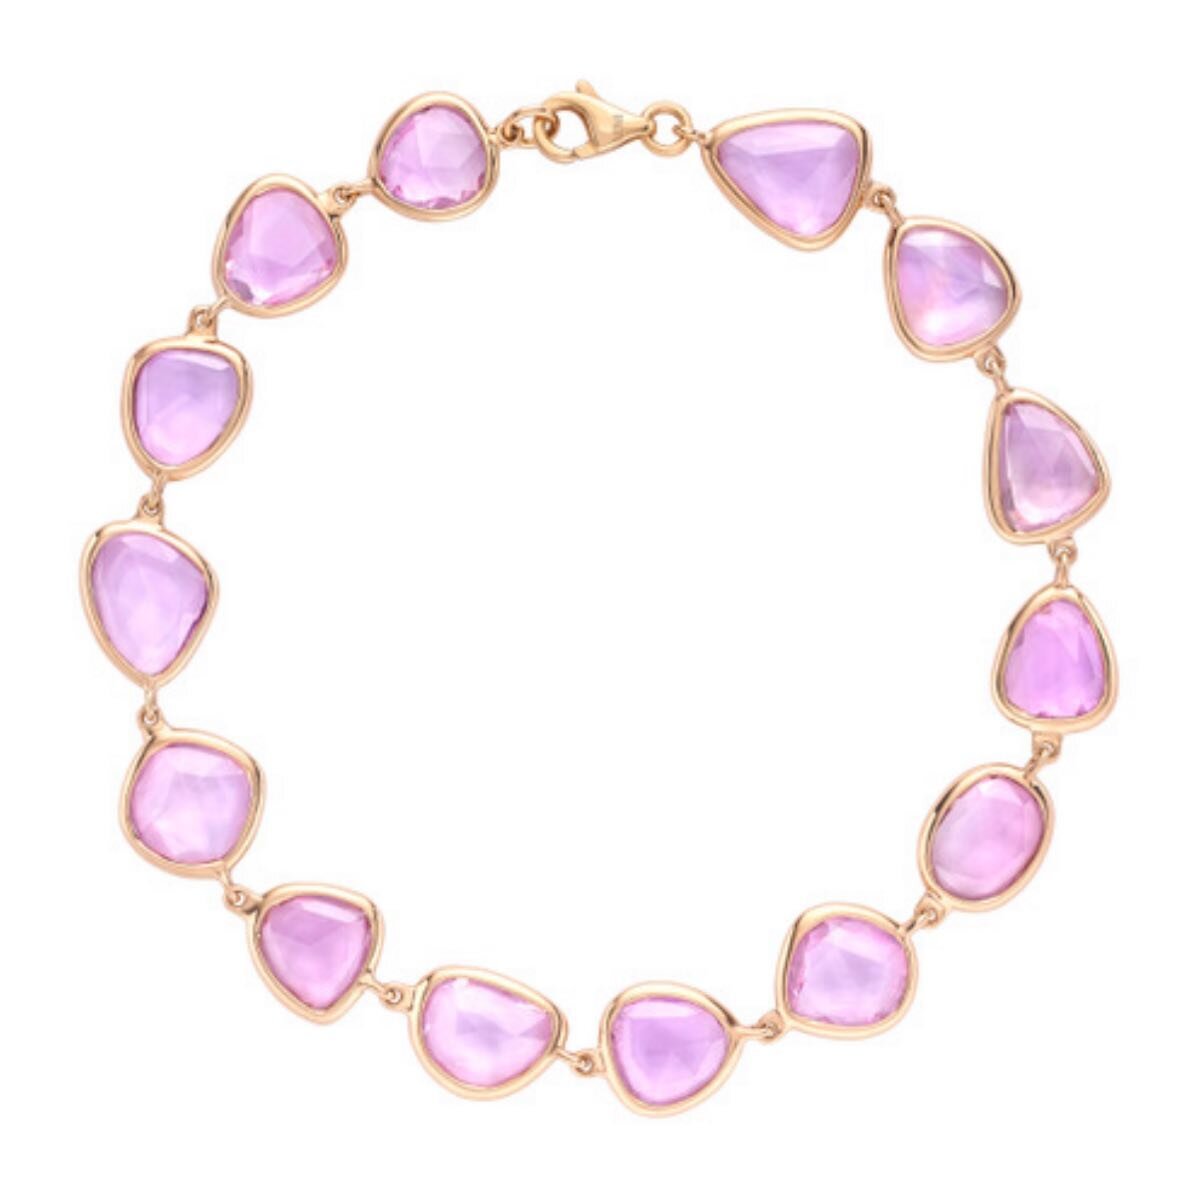 On Friday&rsquo;s we wear pink 🎀#pinksapohire #bracelet #mimibaldwinjewellery